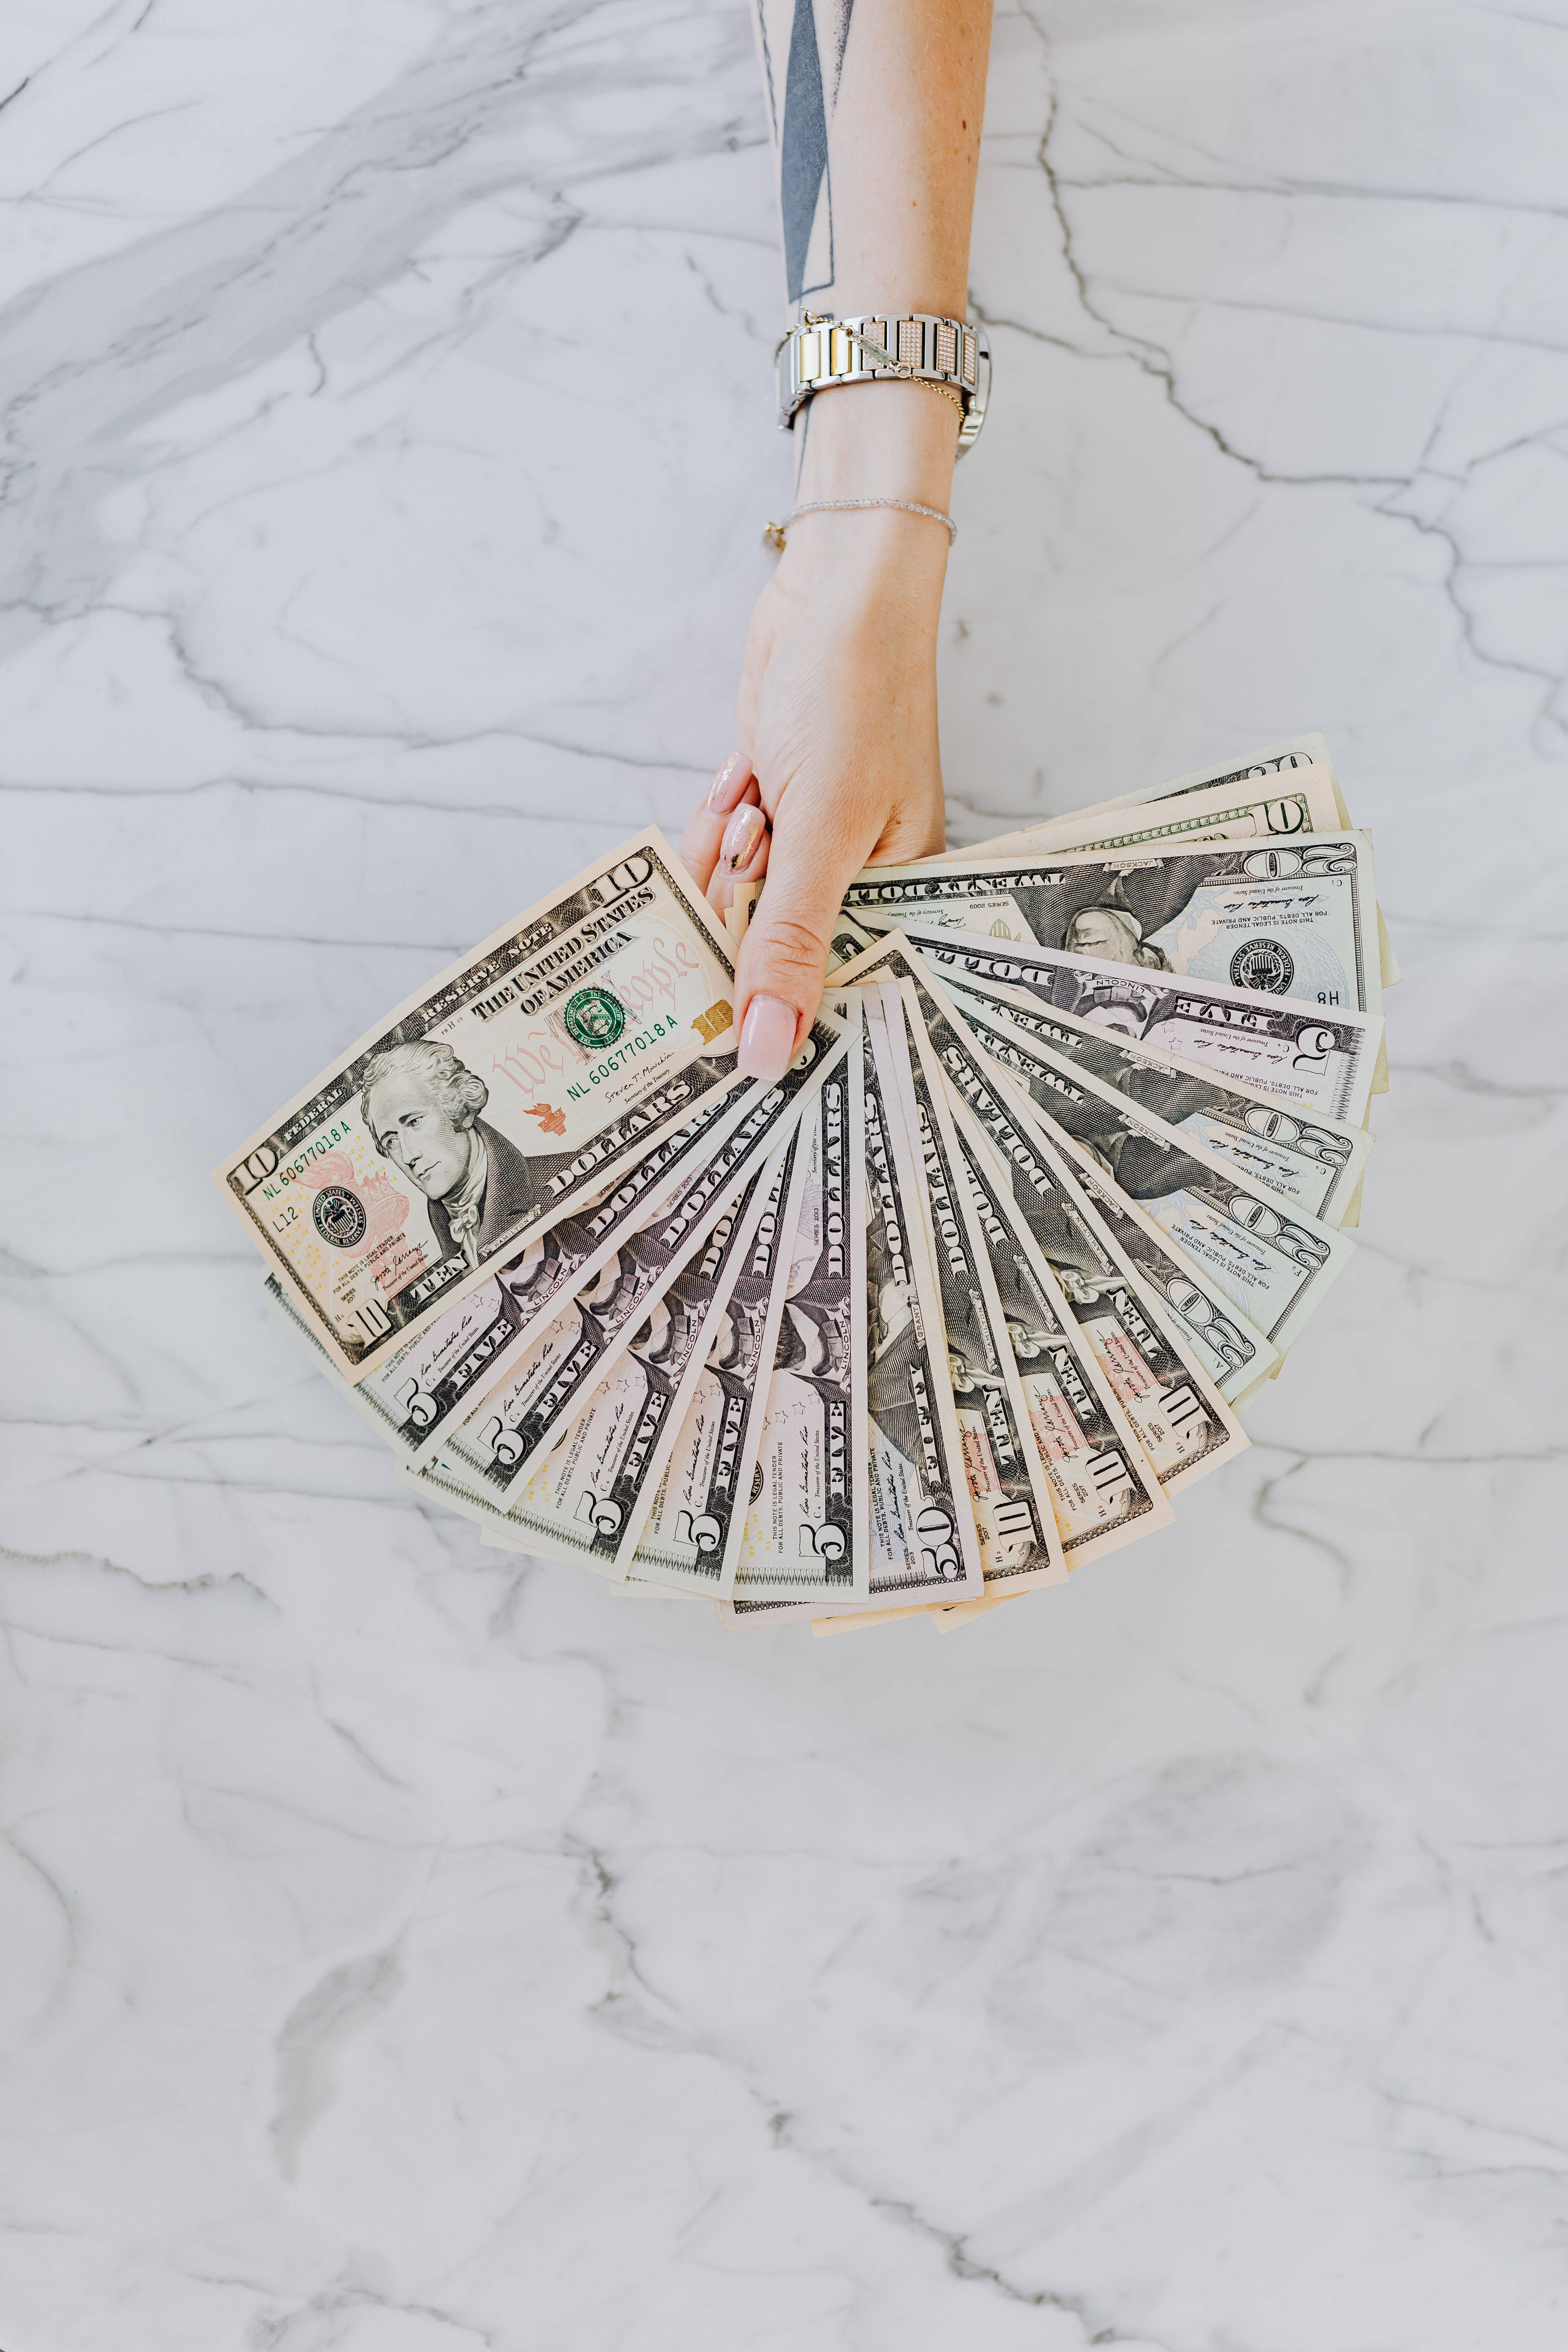 A woman's hand holding a fan of 20 dollar bills. - Money